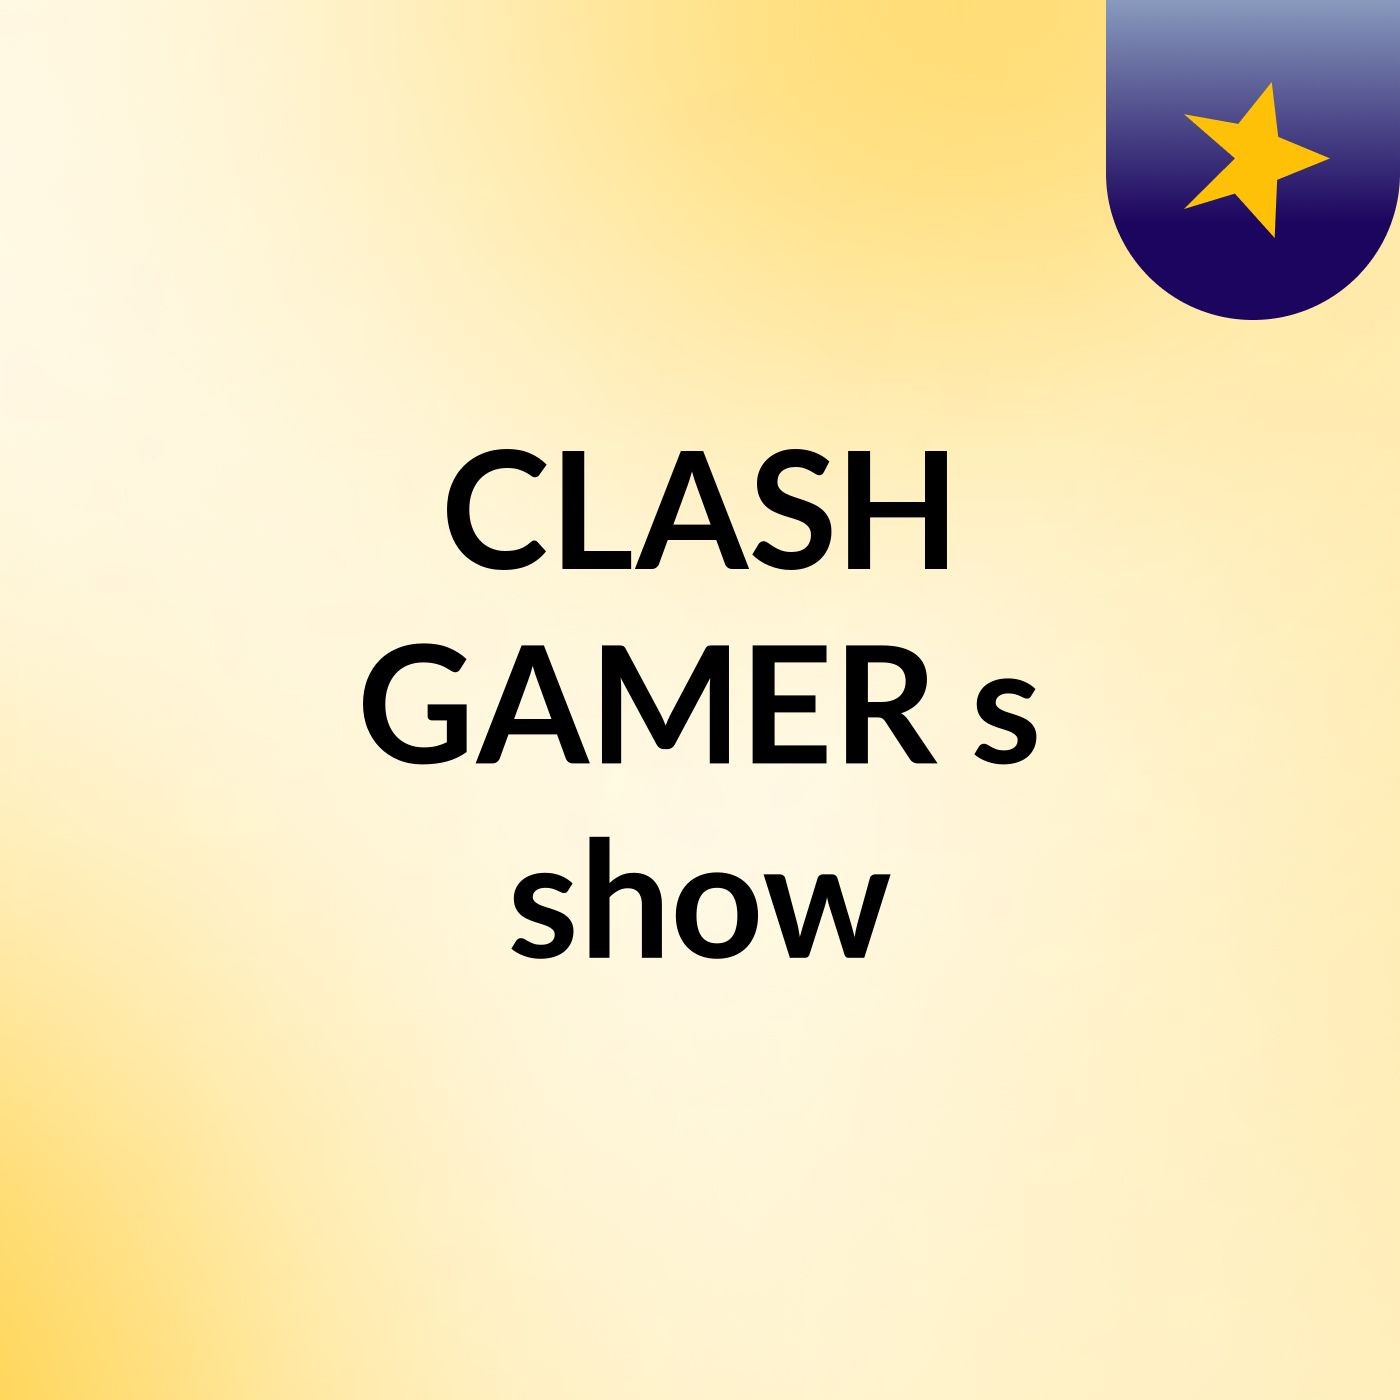 CLASH GAMER's show